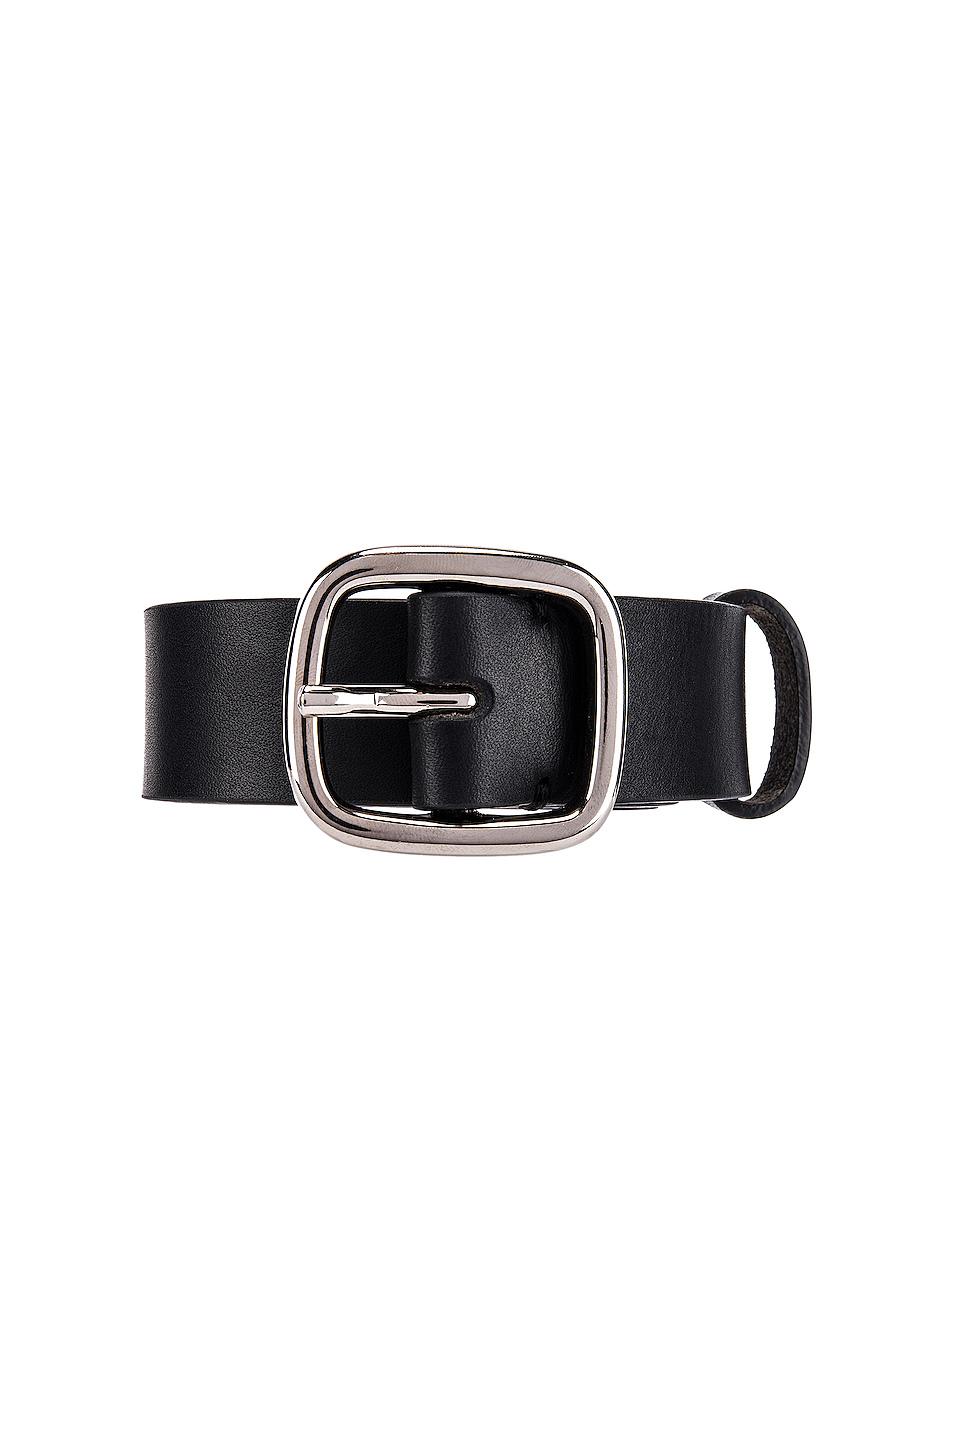 Comme des Garçons Leather Belt With Buckle in Black for Men - Lyst